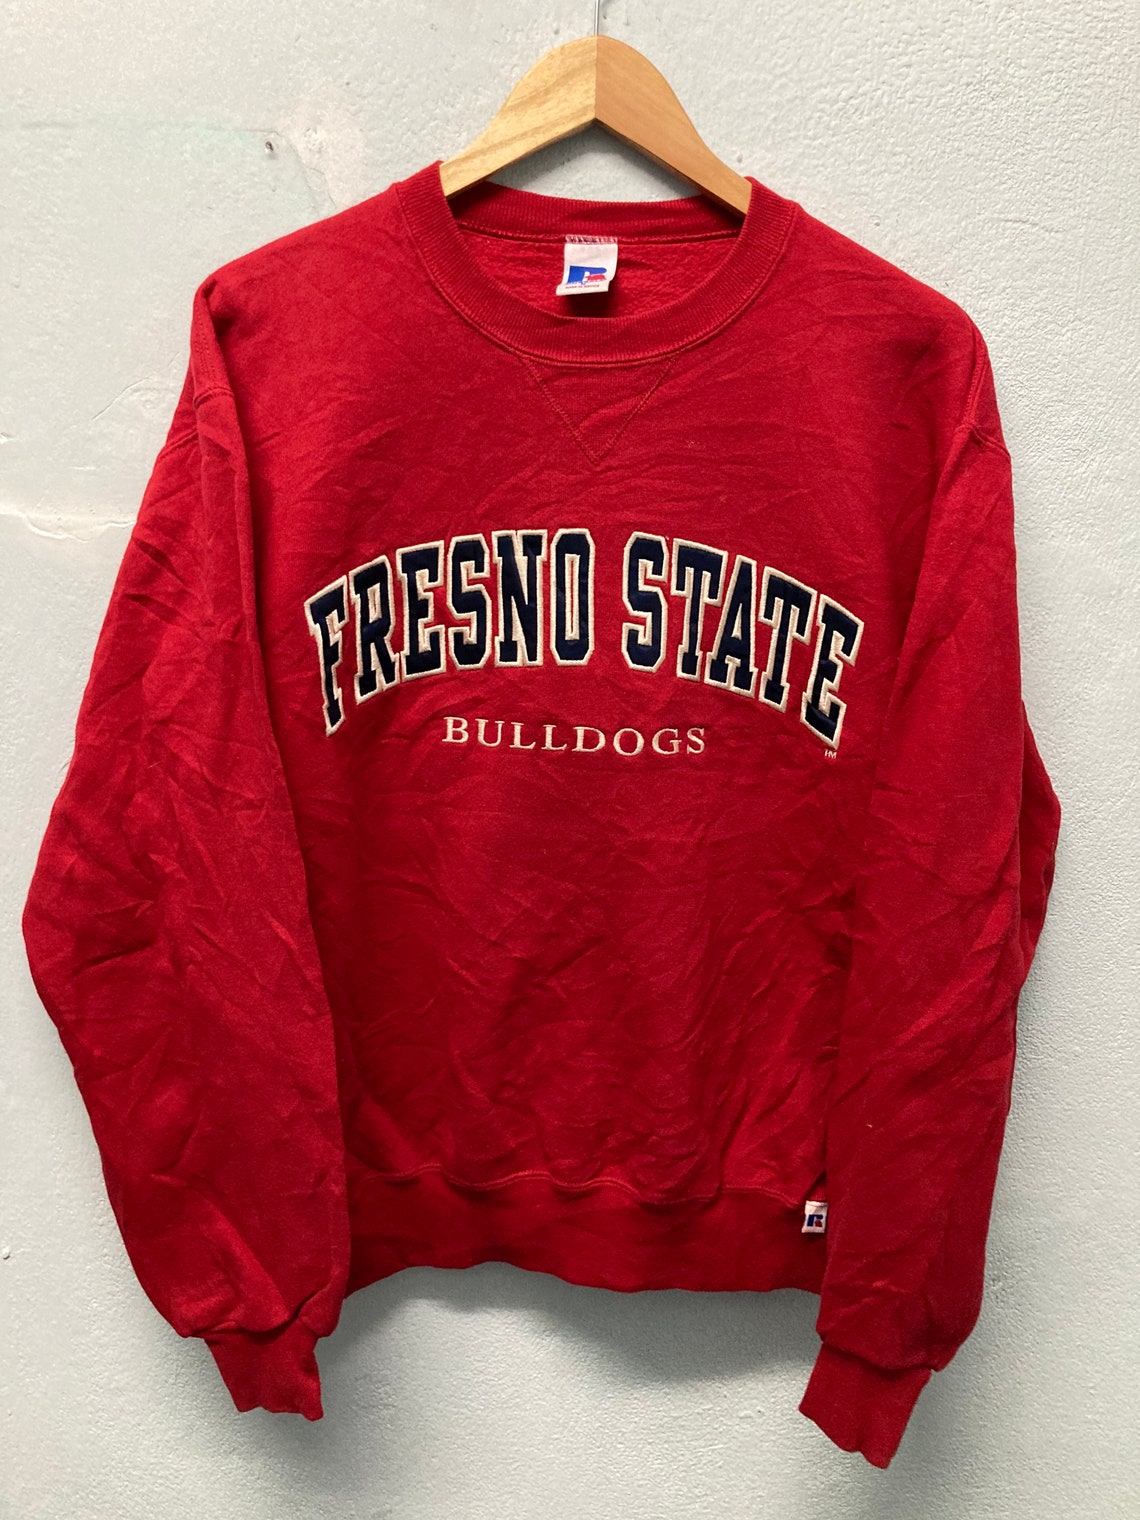 Vintage Fresno State Bulldogs Sweater size M | Etsy